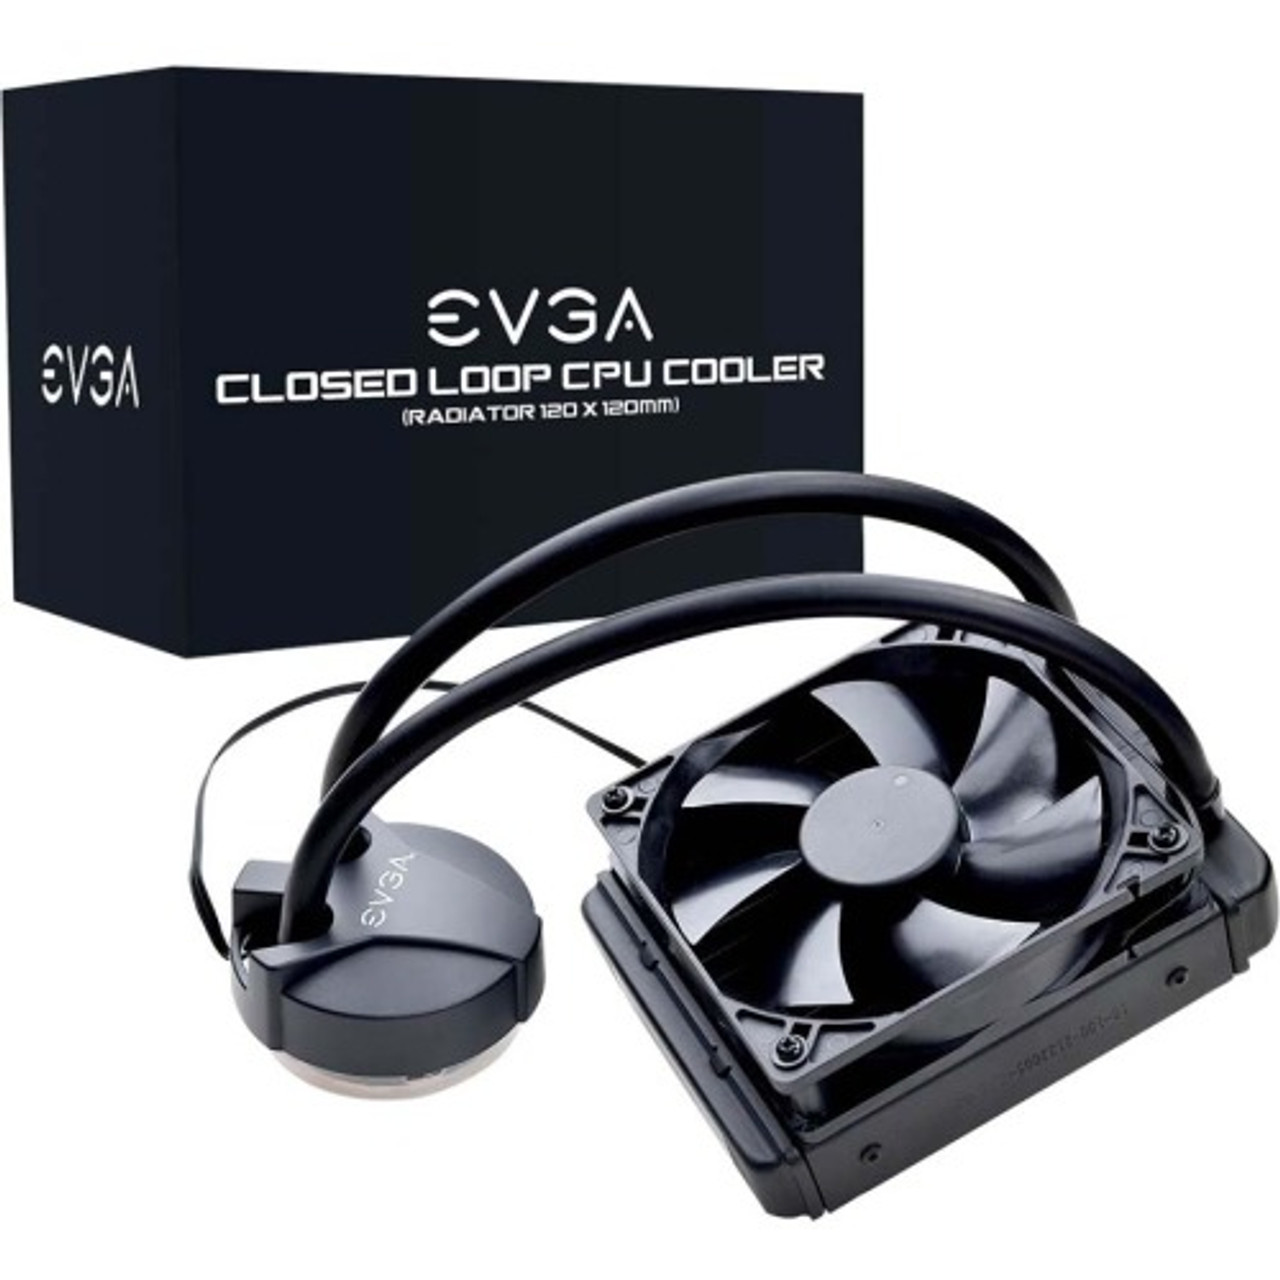 400-HY-CL11-V1 EVGA CLC 120 CL11 Liquid / Water CPU Cooler, Intel Cooling 